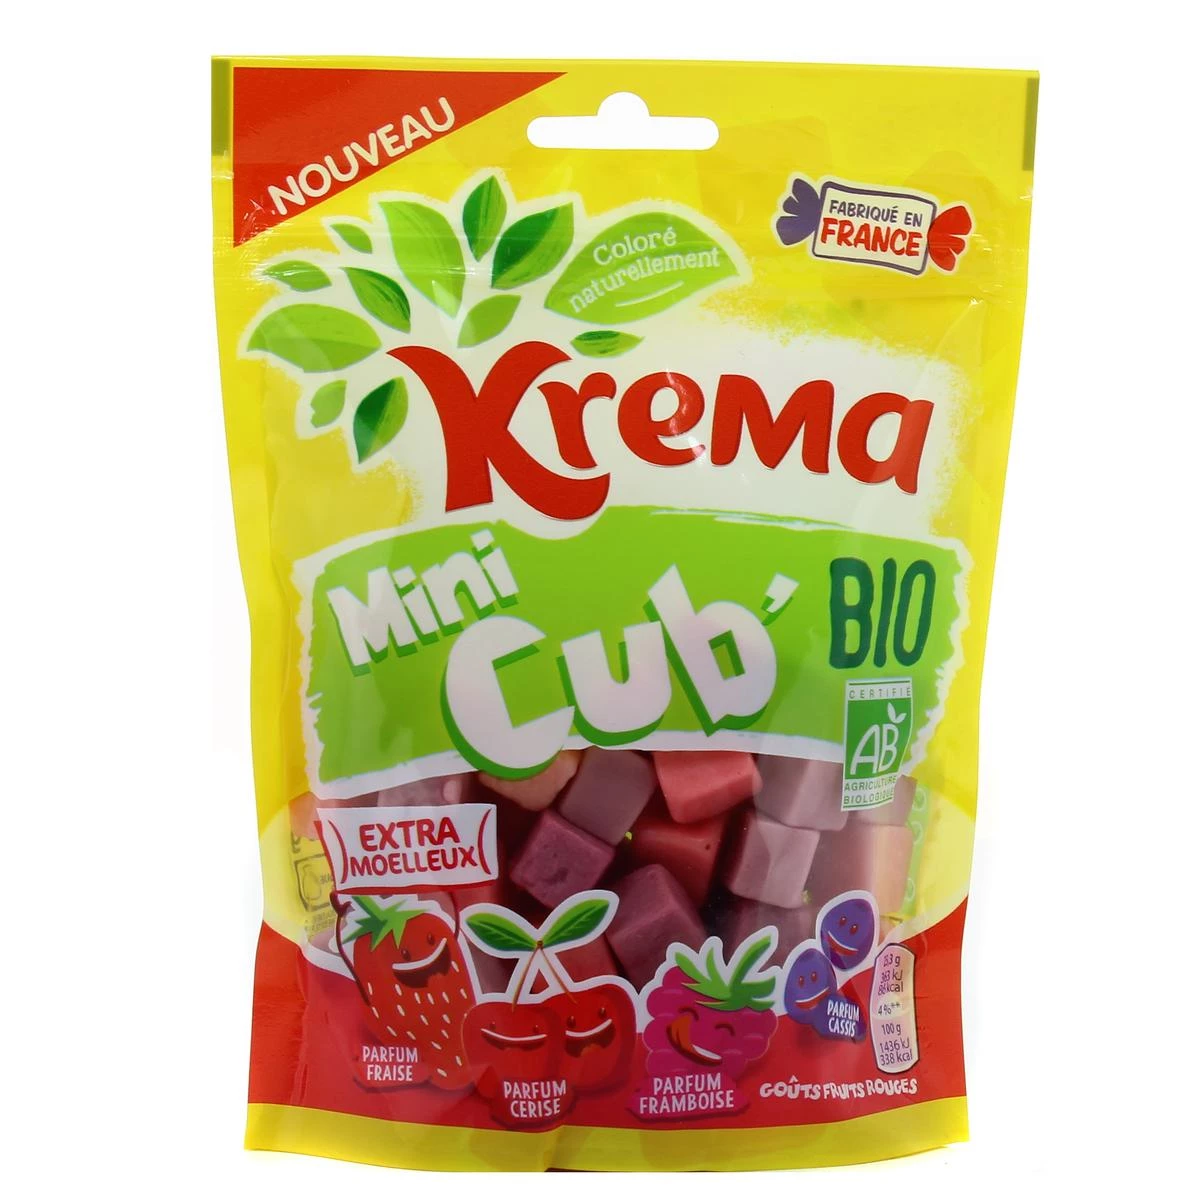 Bonbons mini cub Bio KREMA